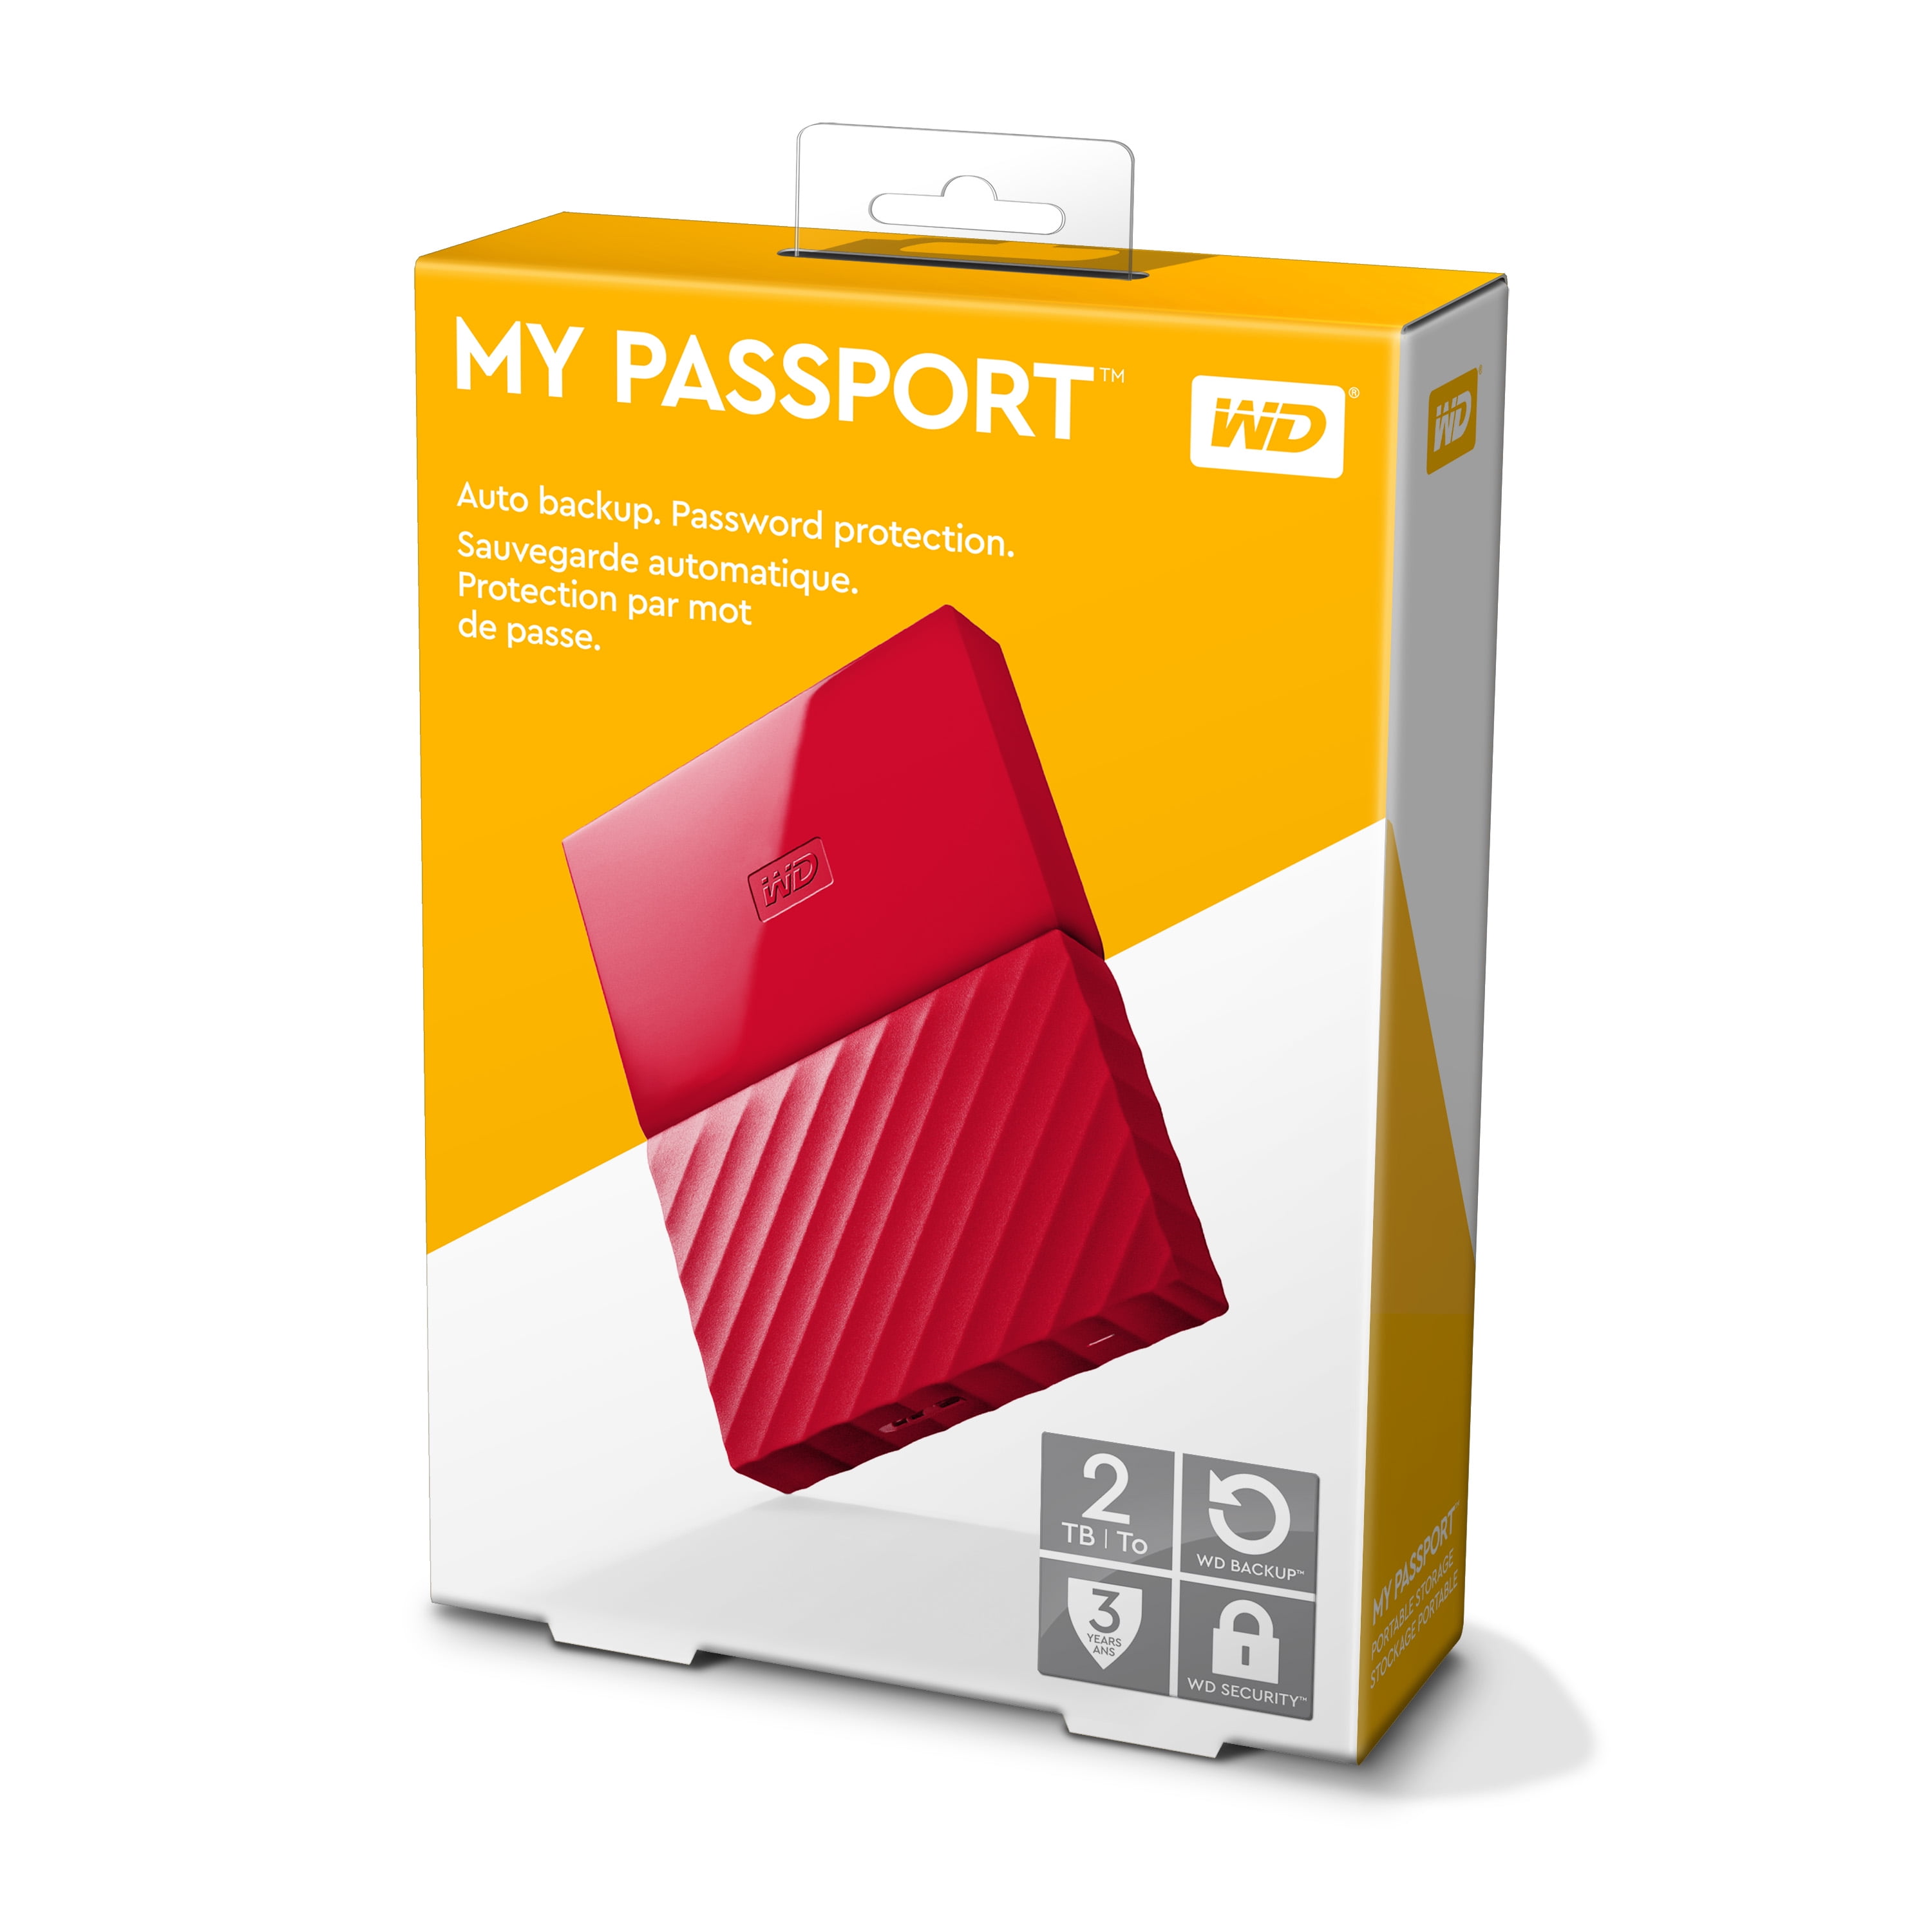 WD 2TB White My Passport Portable External Hard Drive - USB 3.0 Model -  WDBYFT0020BWT-WESN